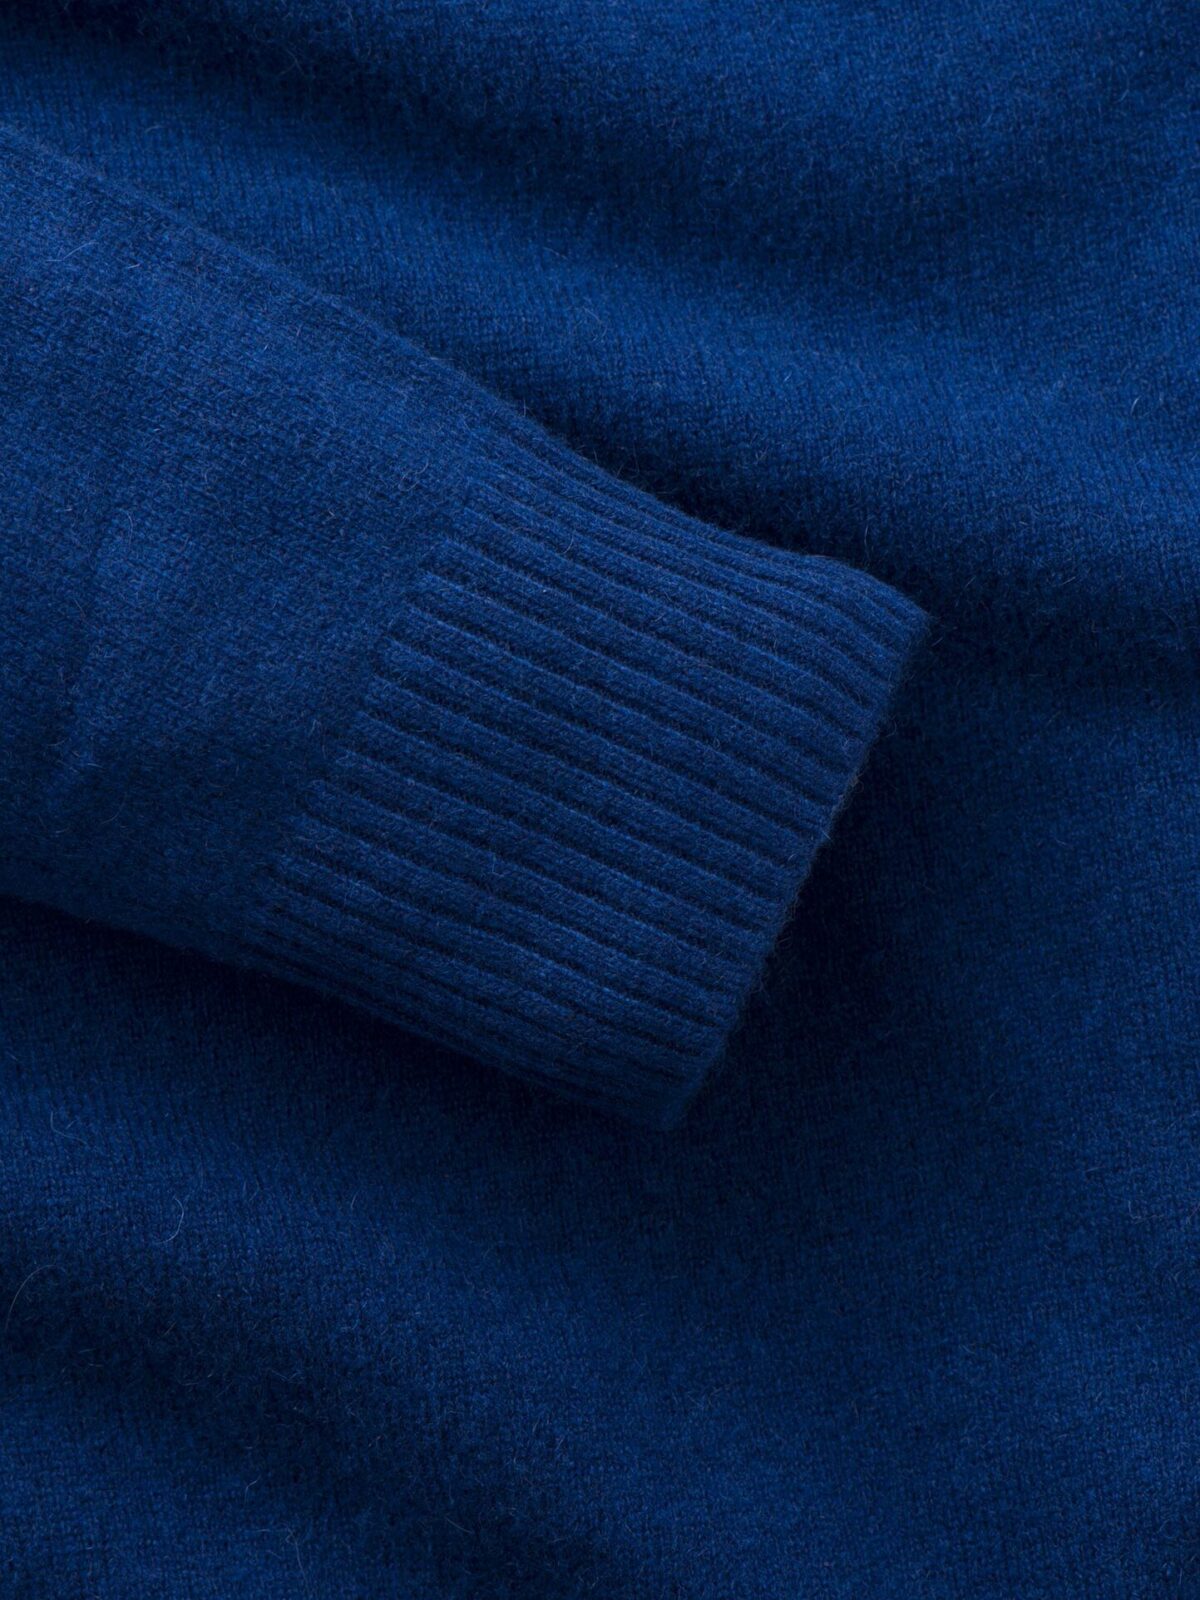 Royal Blue Cashmere V-Neck Sweater